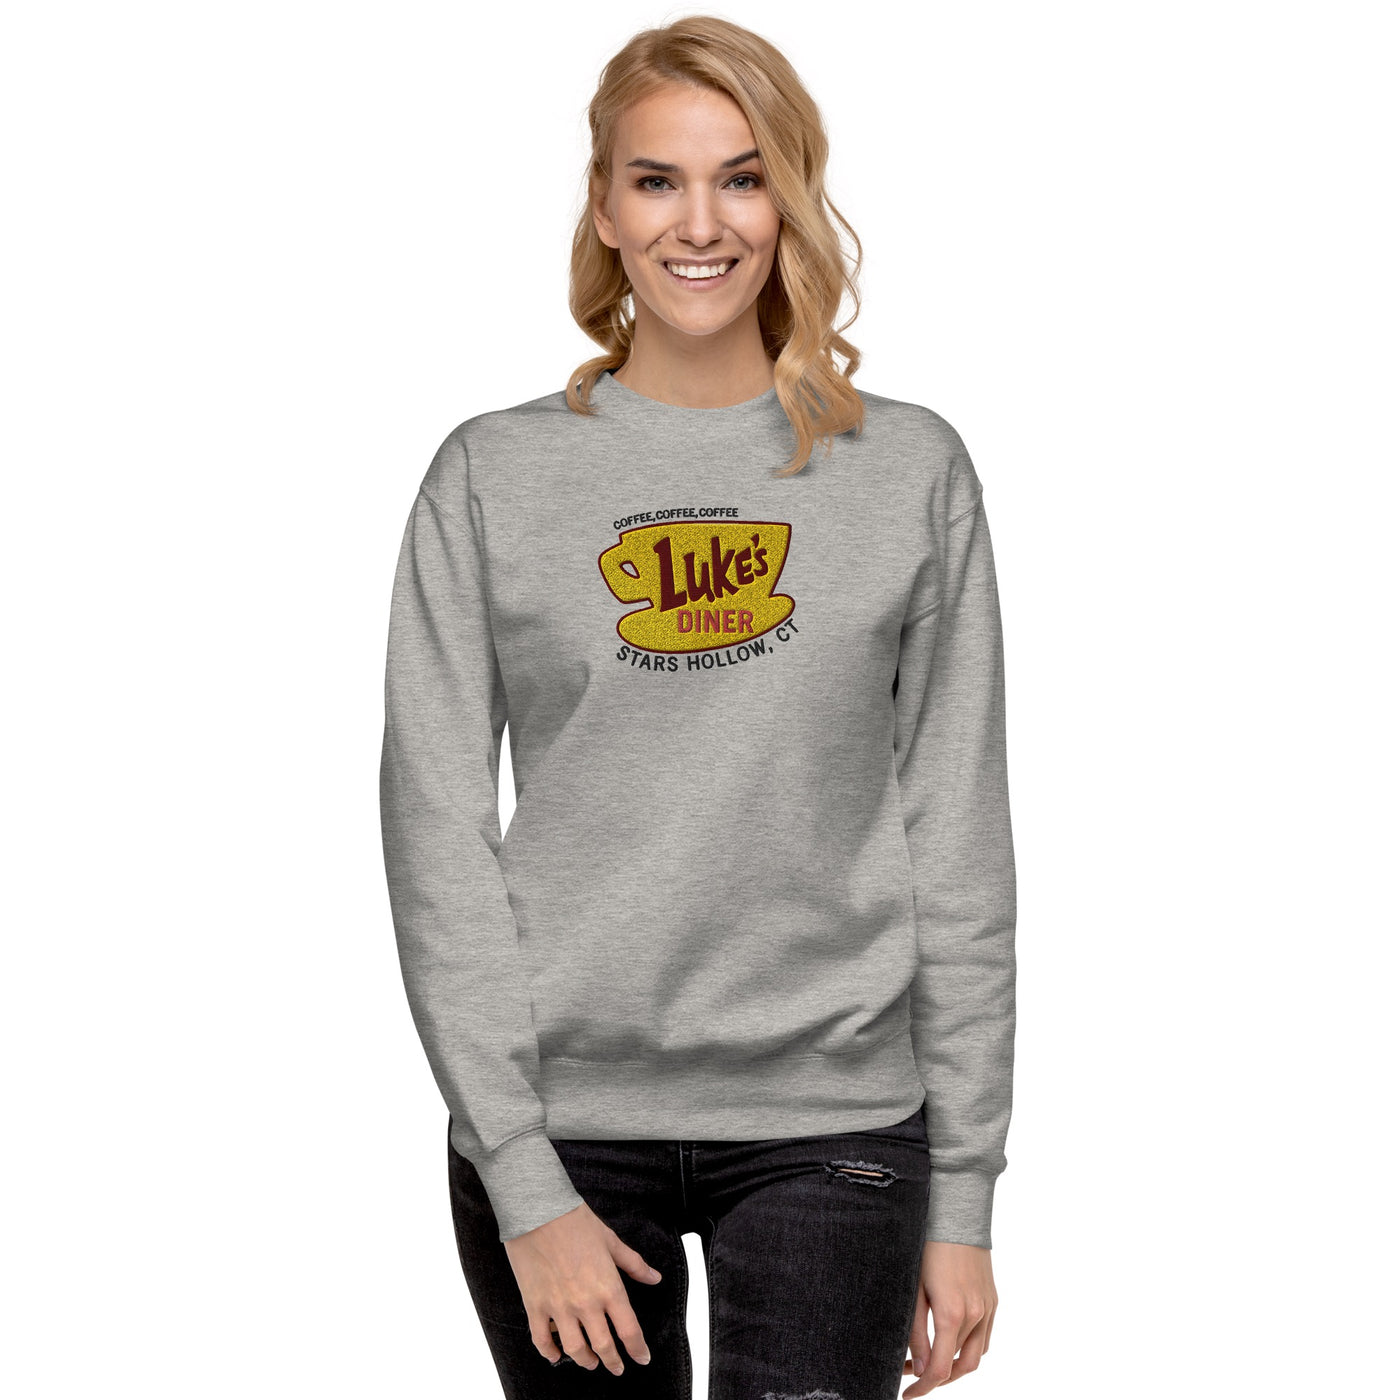 Gilmore Girls Luke’s Diner Embroidered Adult Sweatshirt